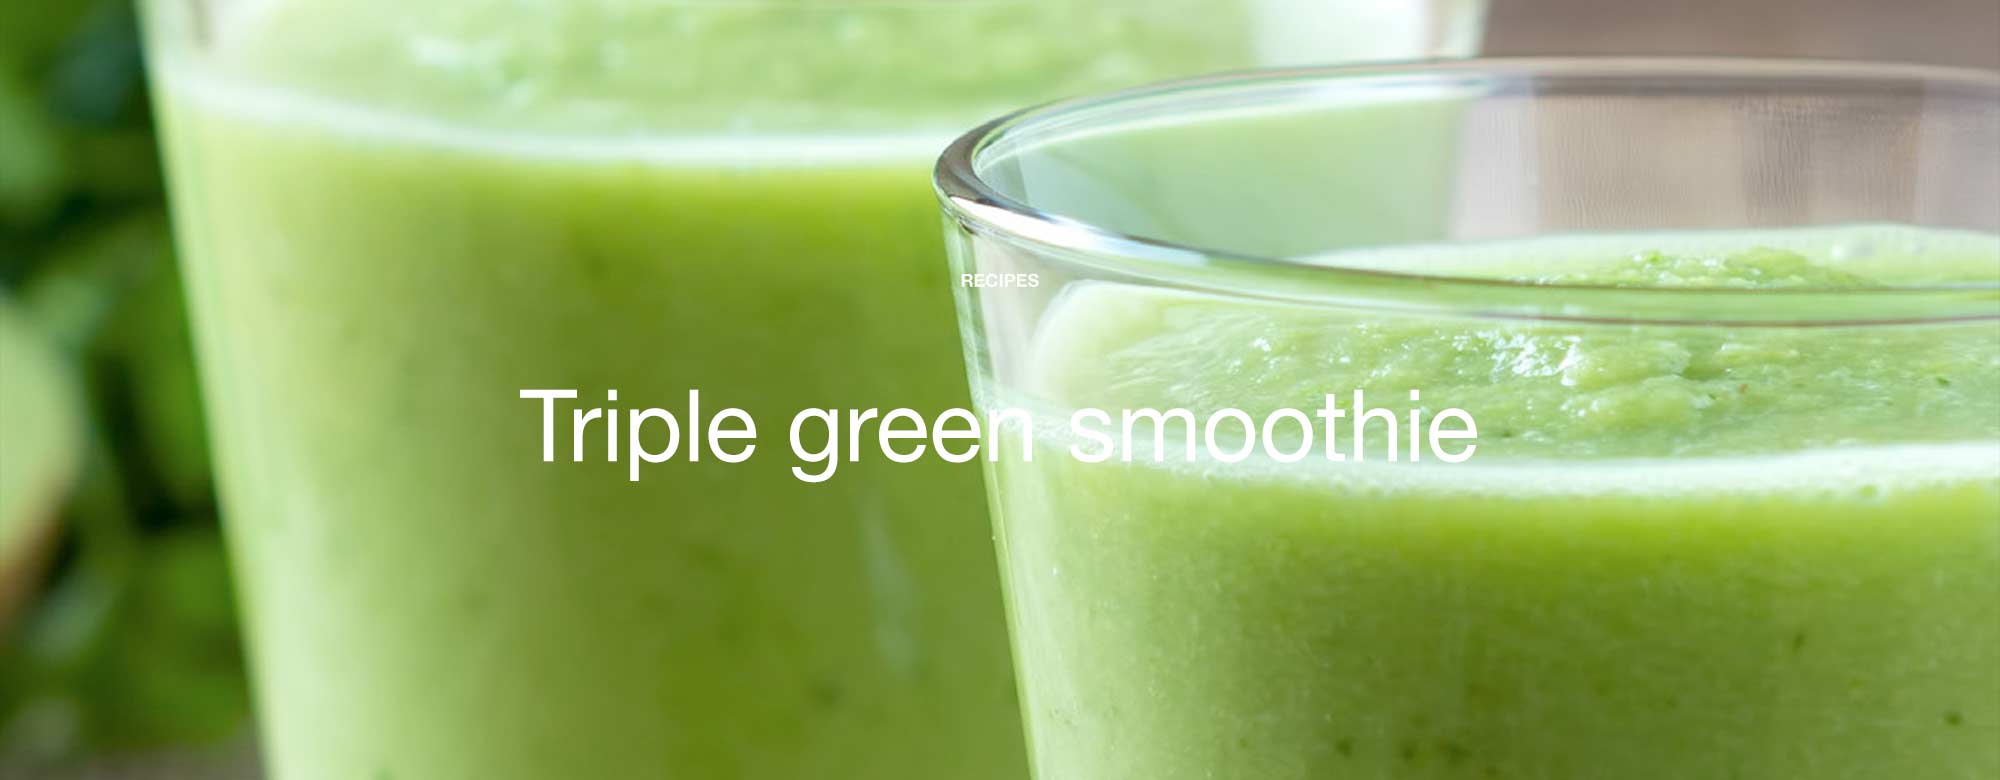 Triple green smoothie